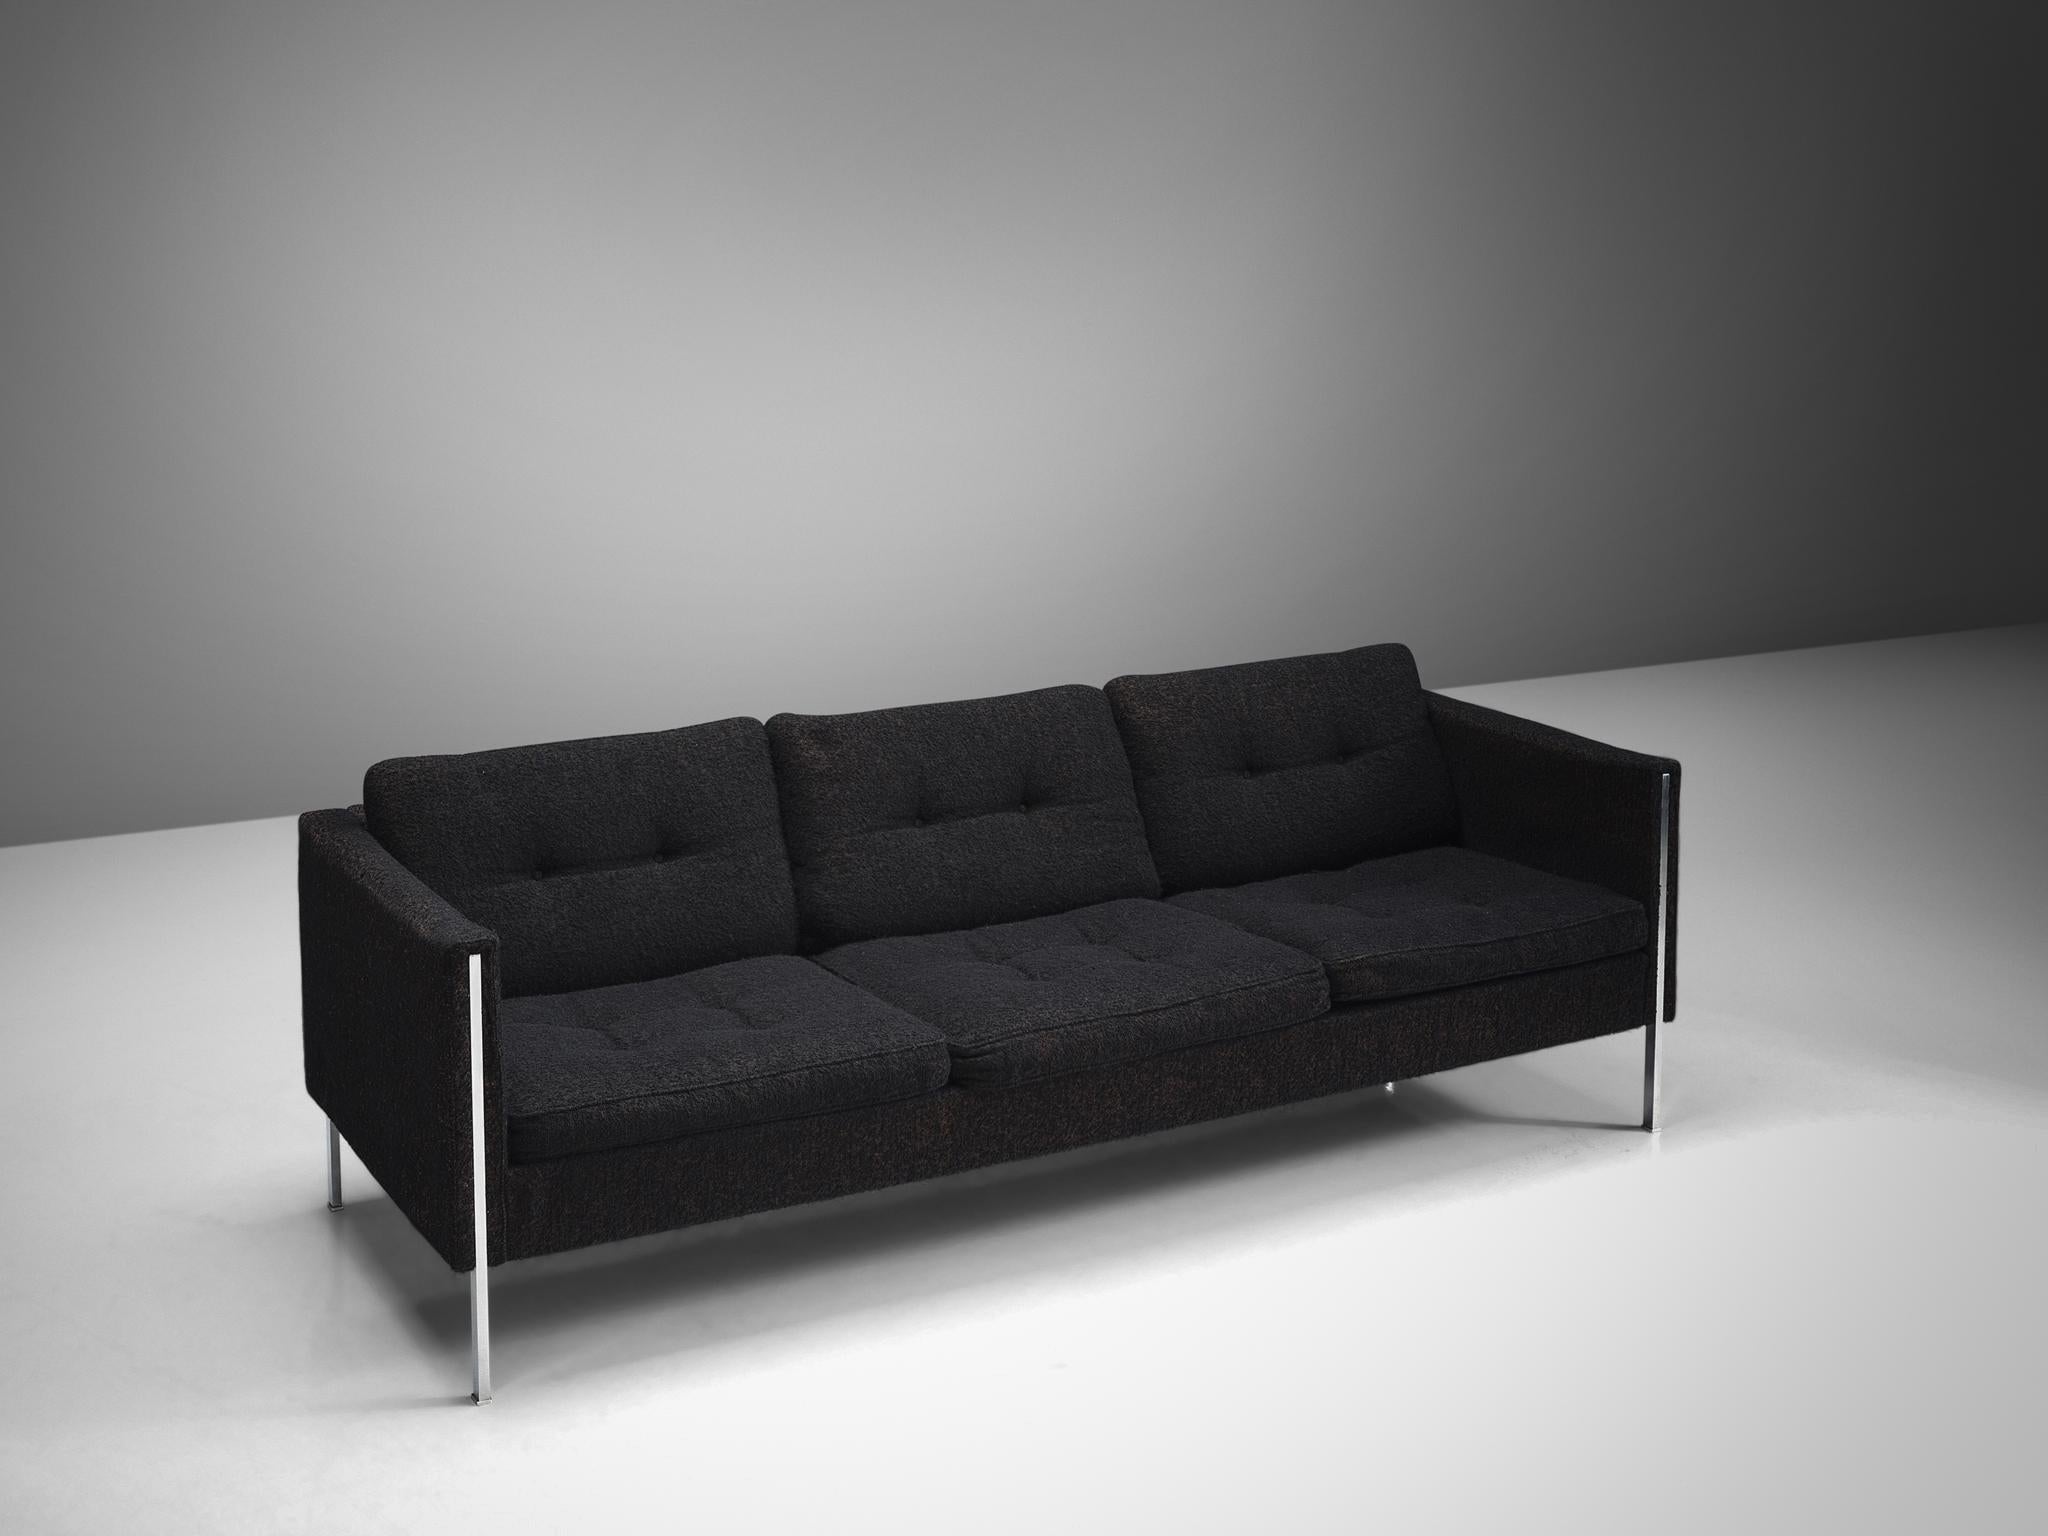 Pierre Paulin for Artifort Sofa in Black Upholstery In Good Condition For Sale In Waalwijk, NL